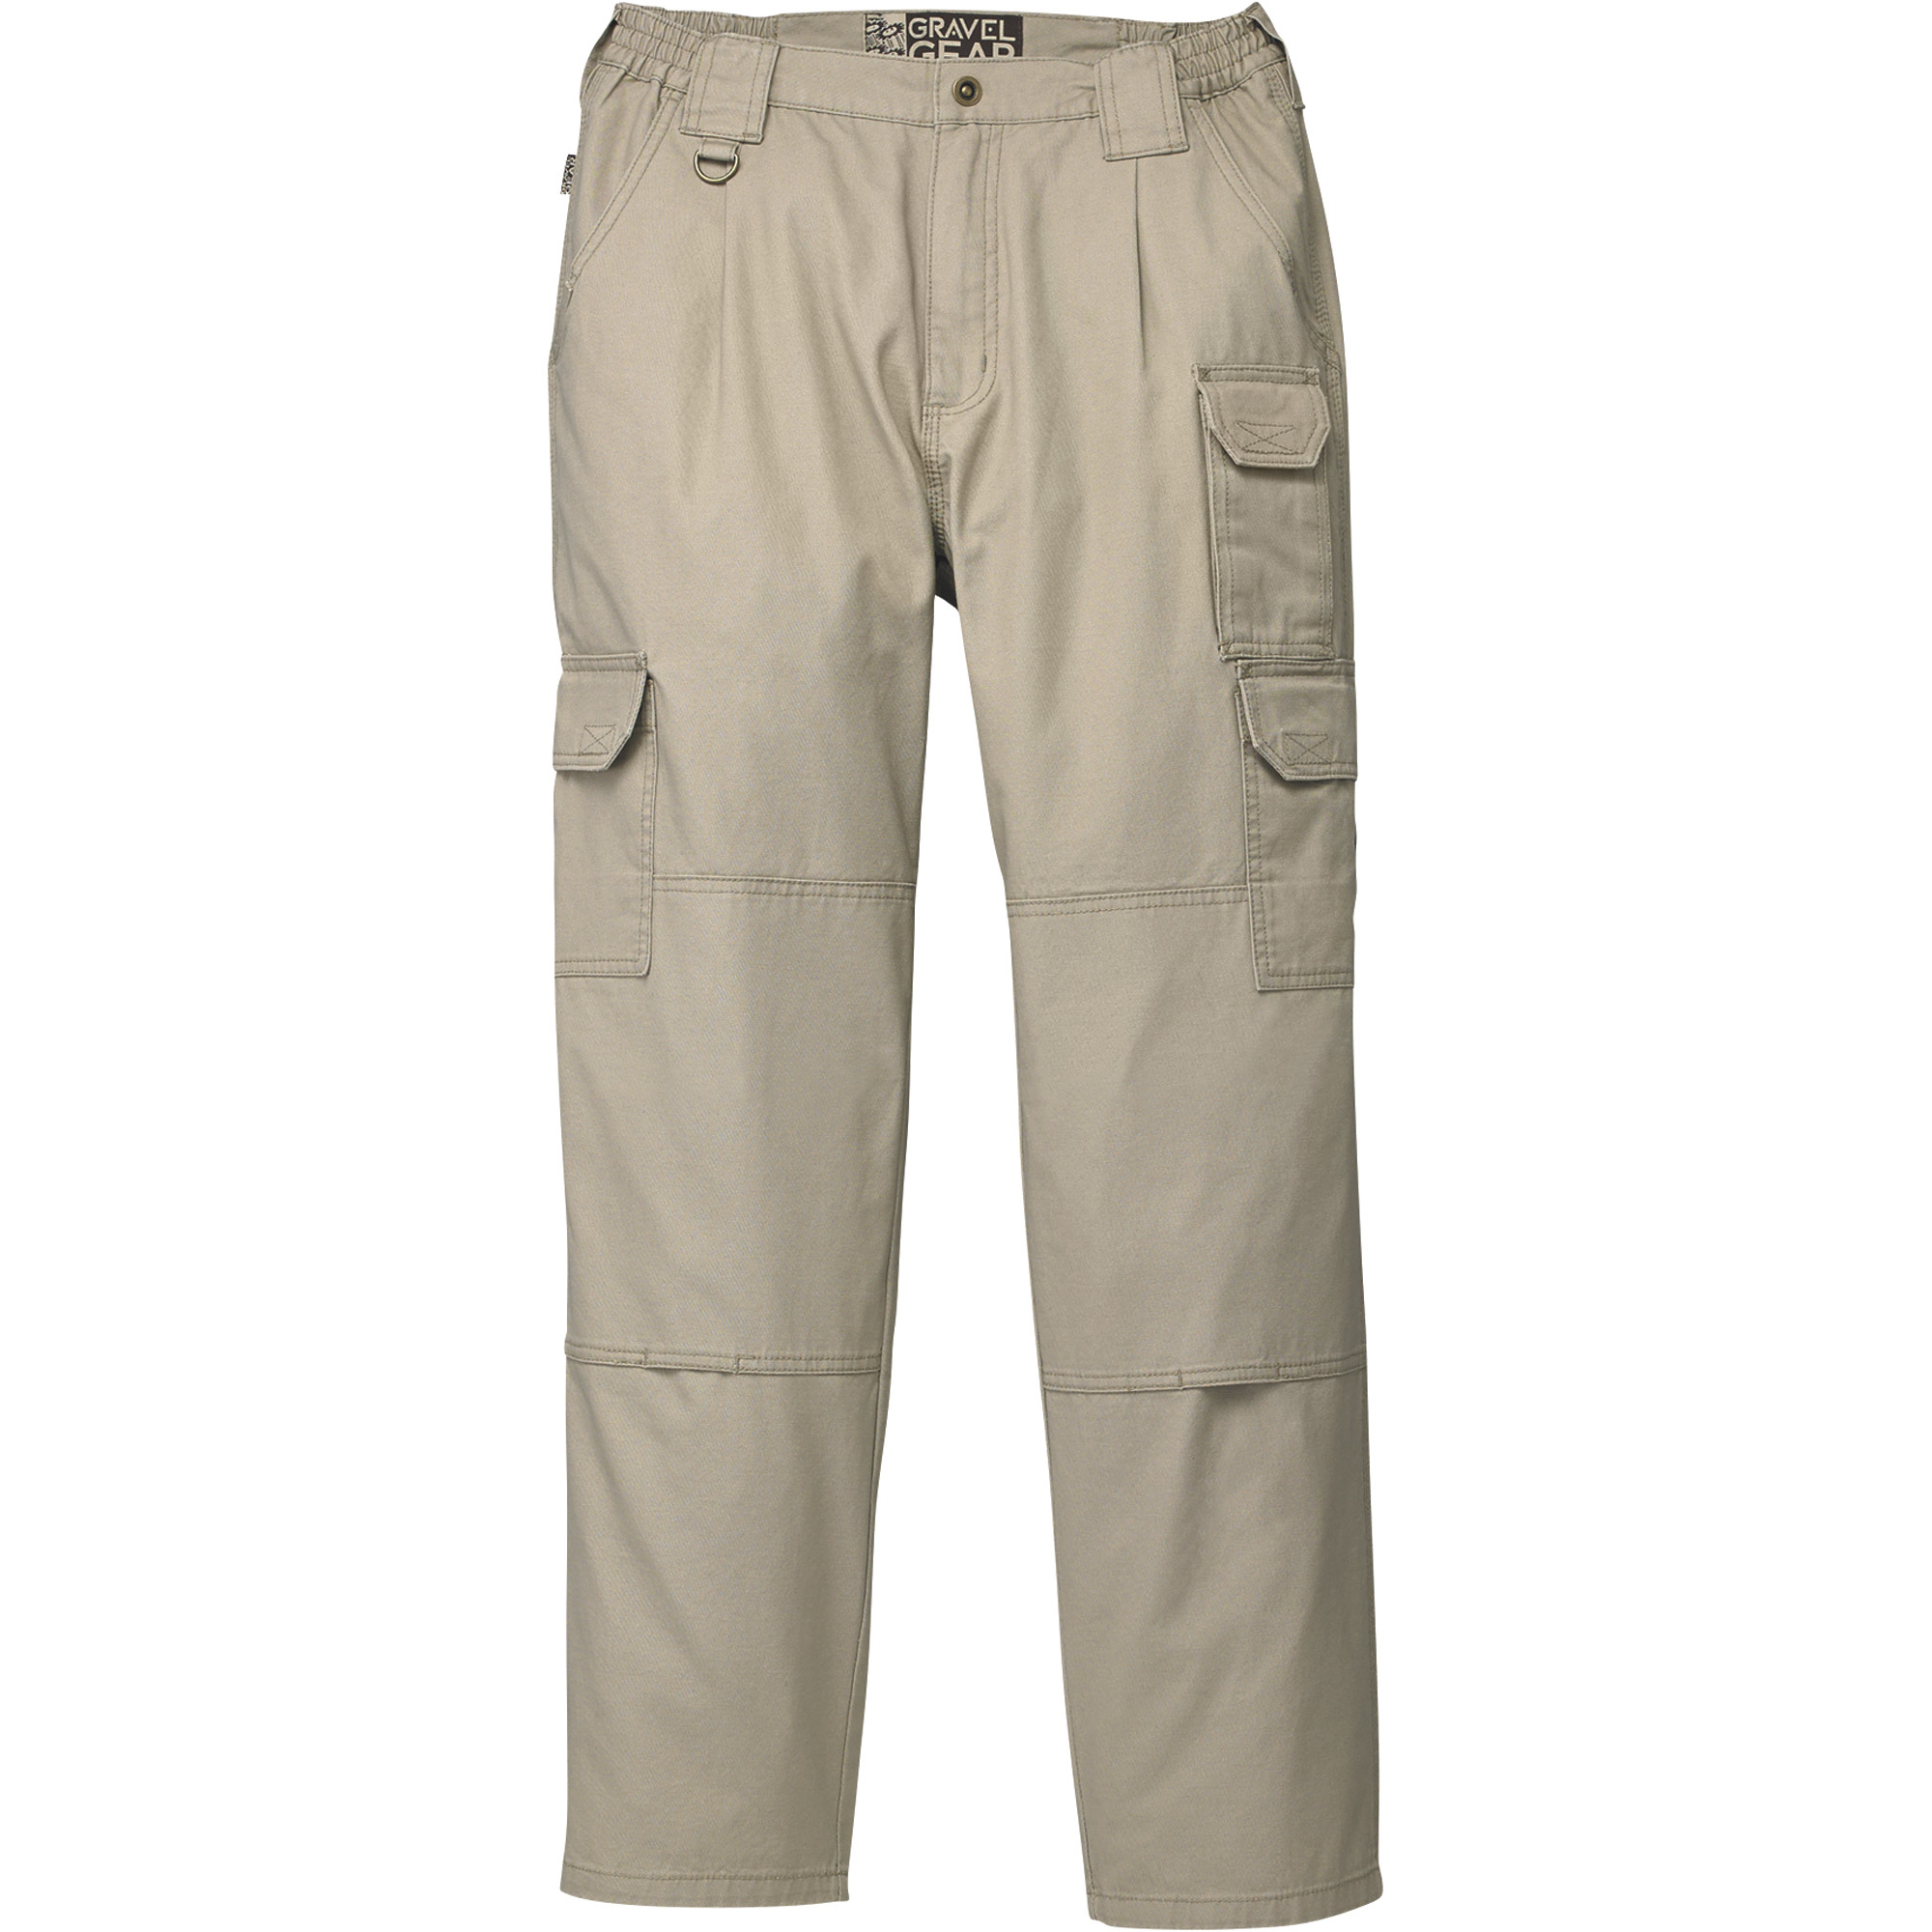 Gravel Gear Men's 7-Pocket Tactical Pants with Teflon - Khaki, 34Inch Waist x 34Inch Inseam